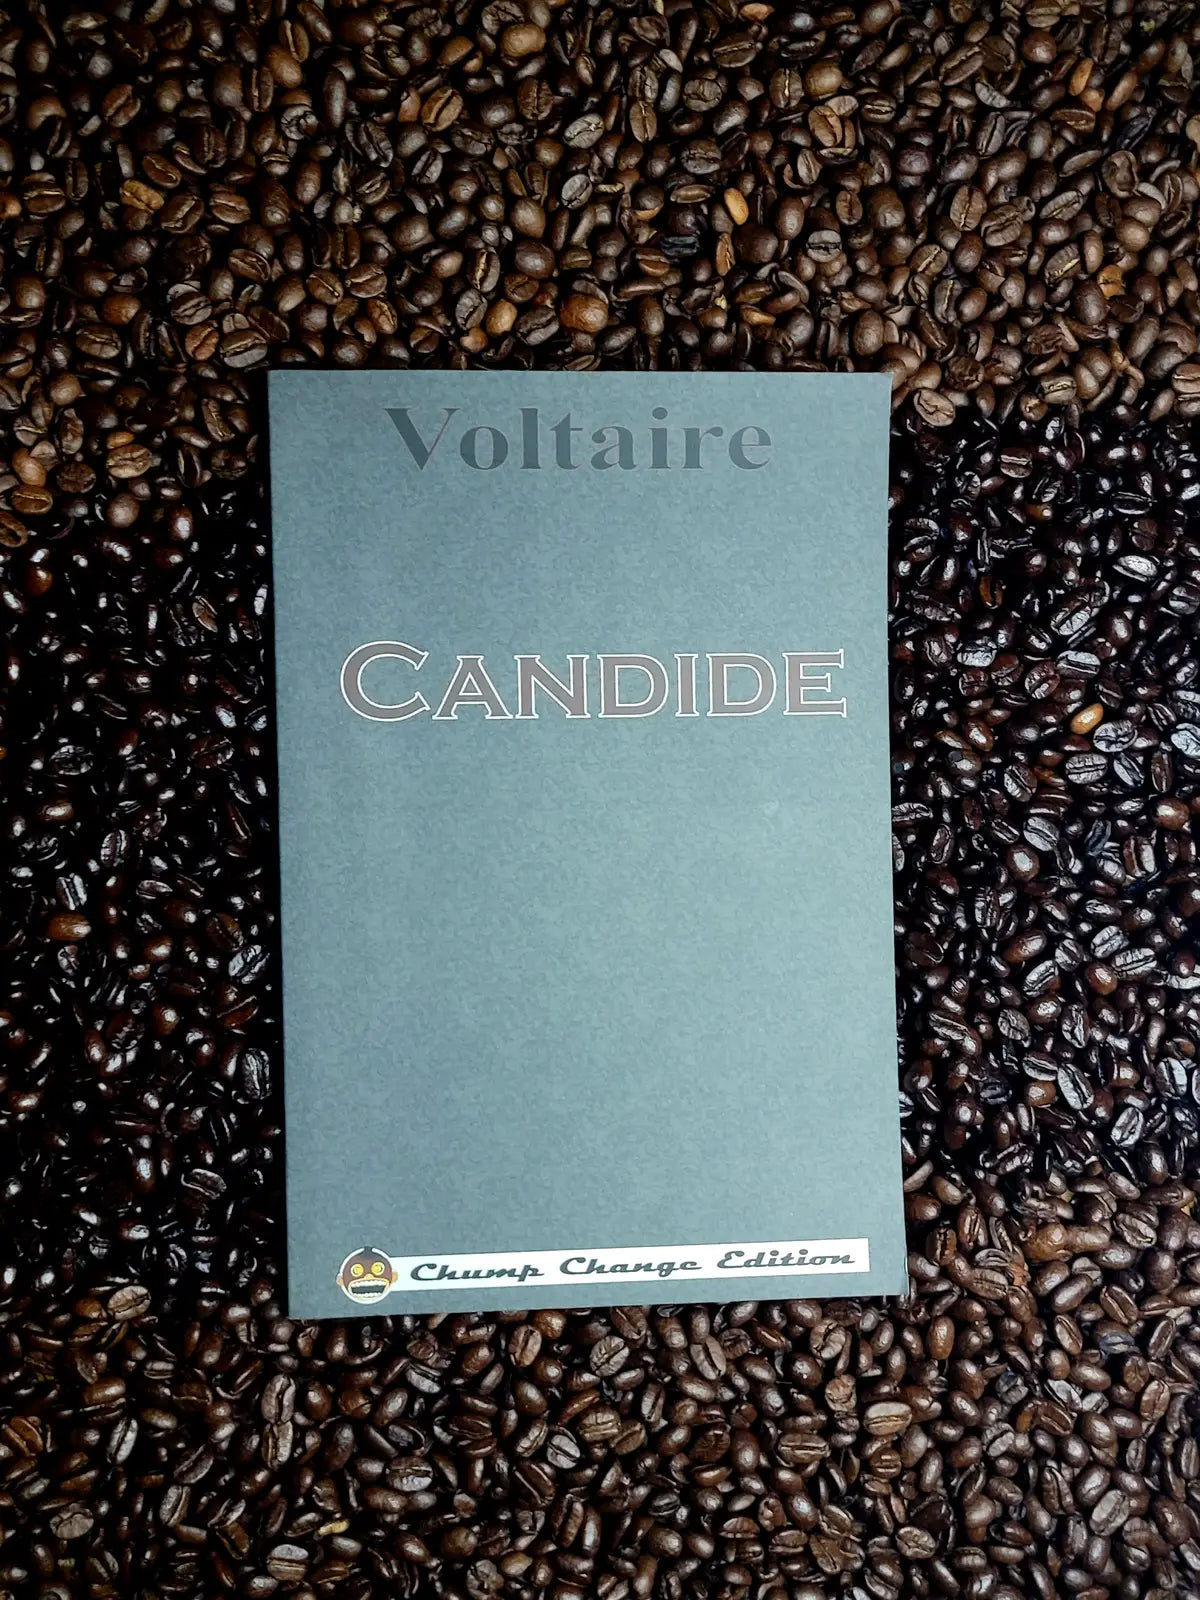 Voltaire's Vanilla